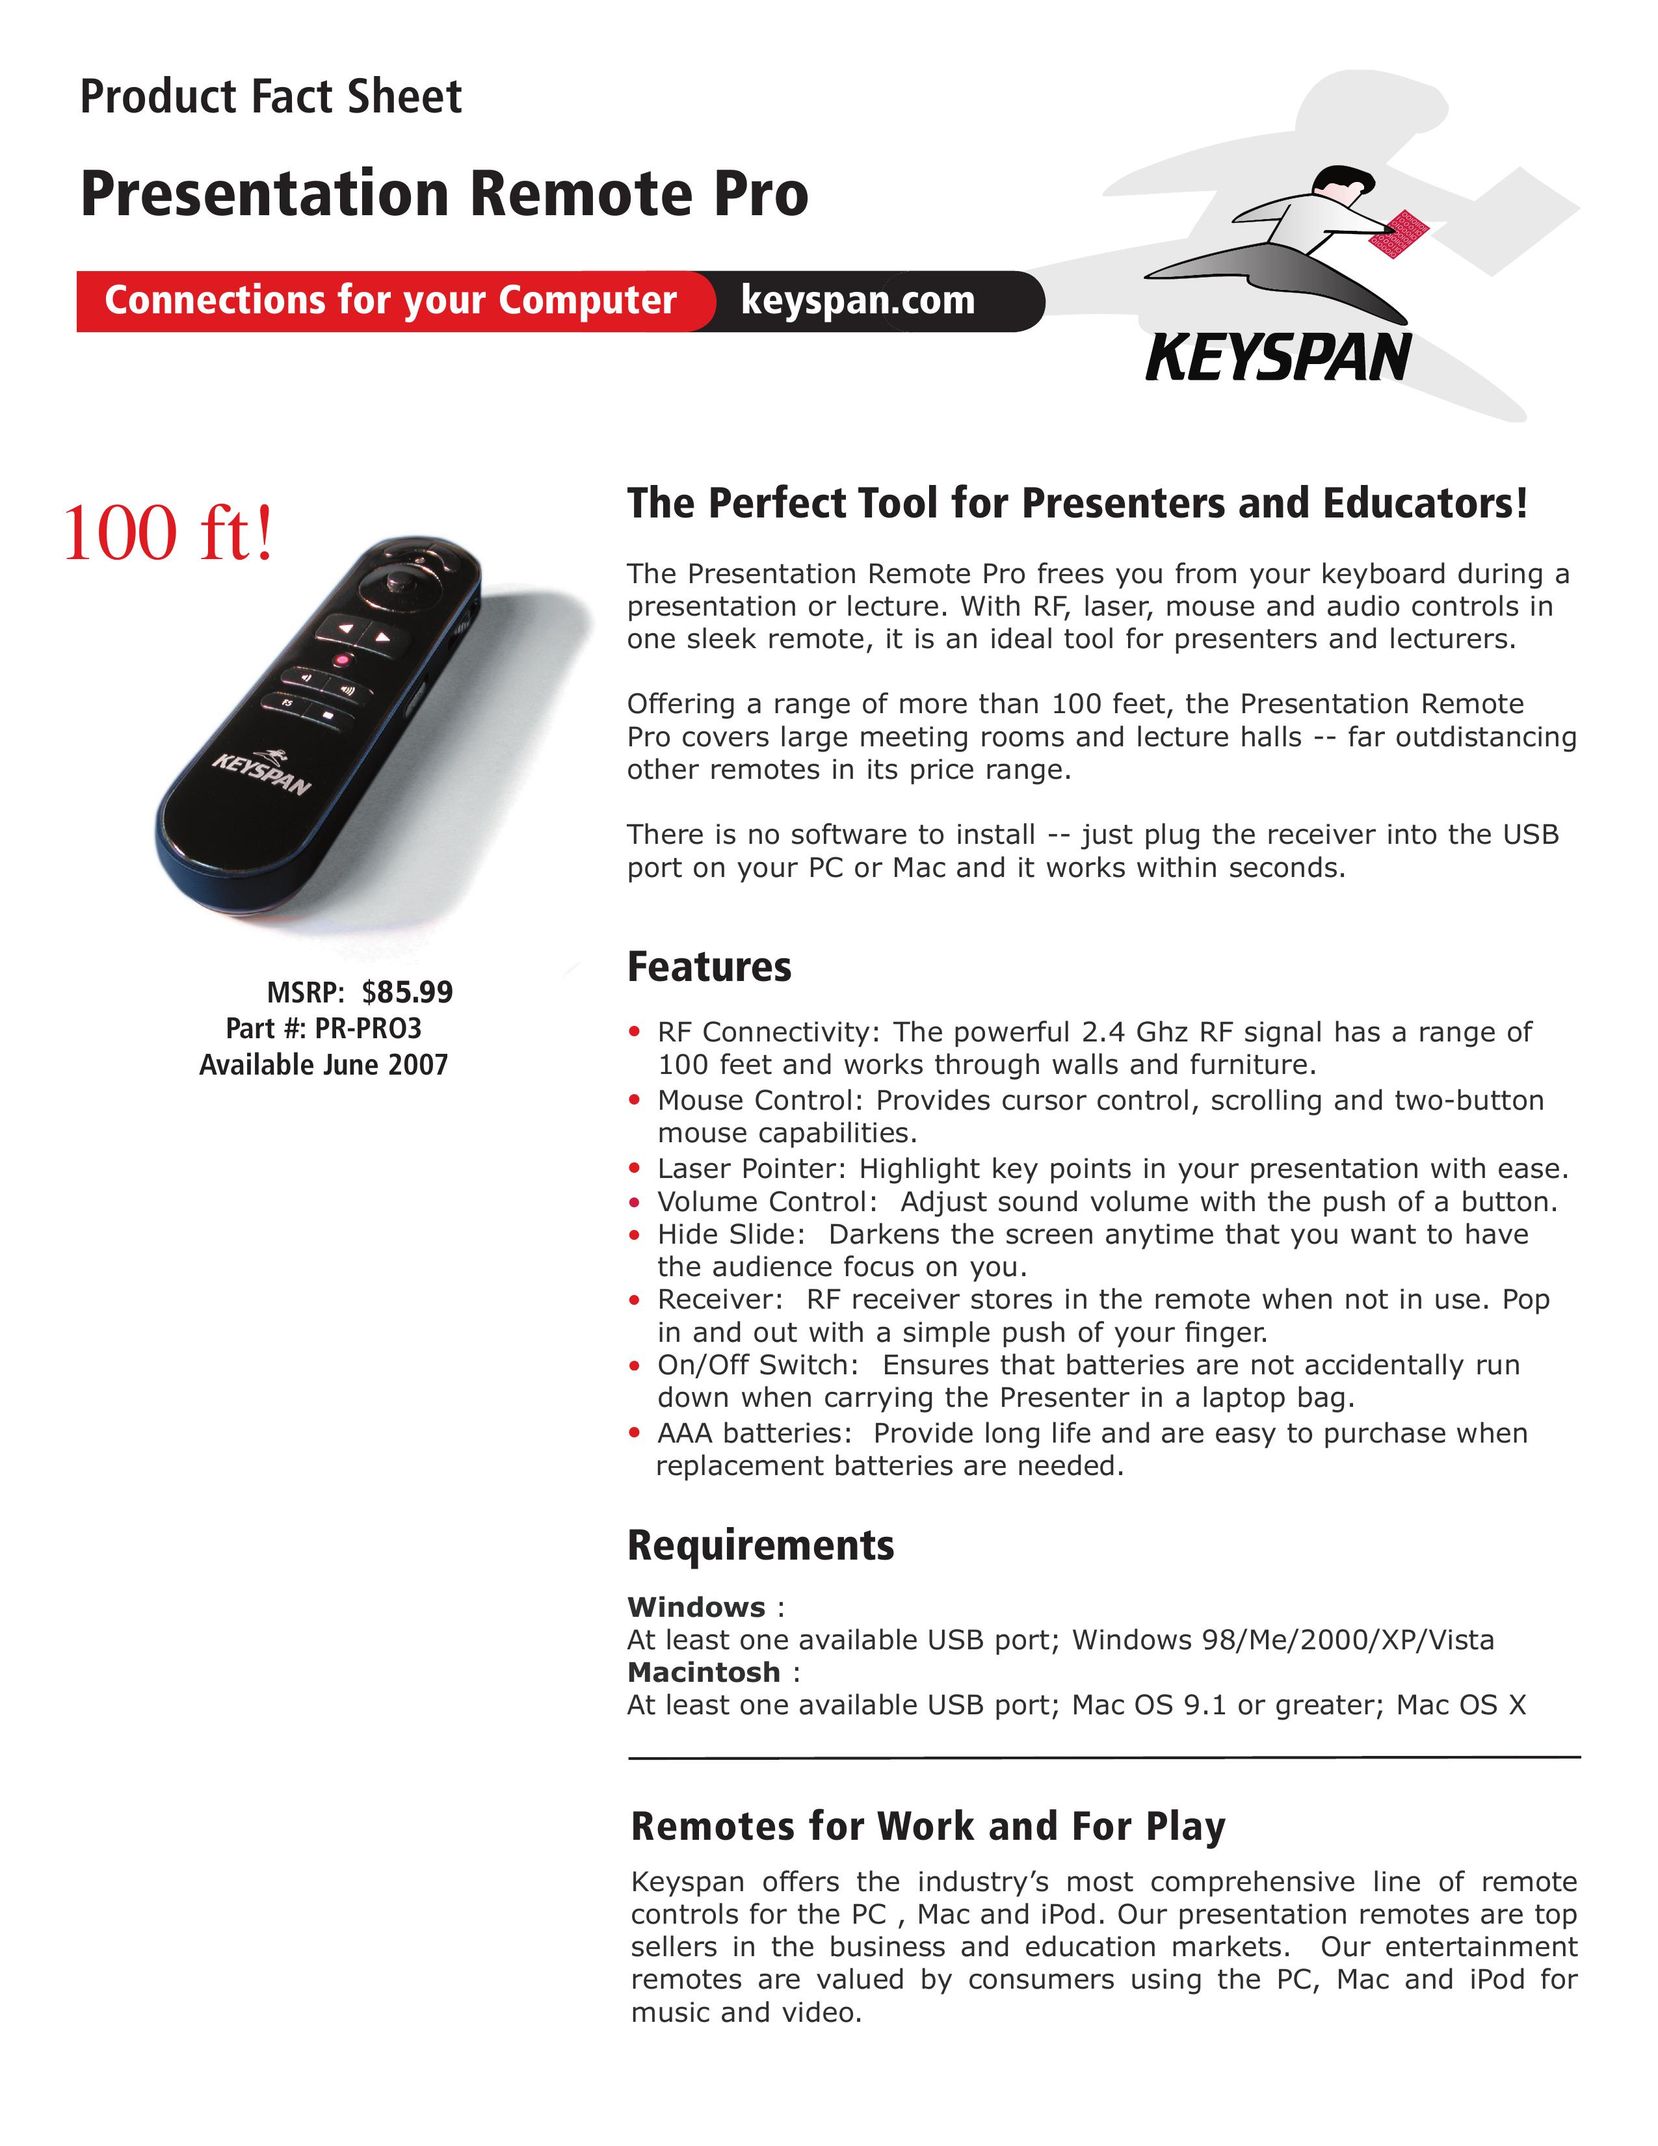 Keyspan PR-PRO3 Universal Remote User Manual